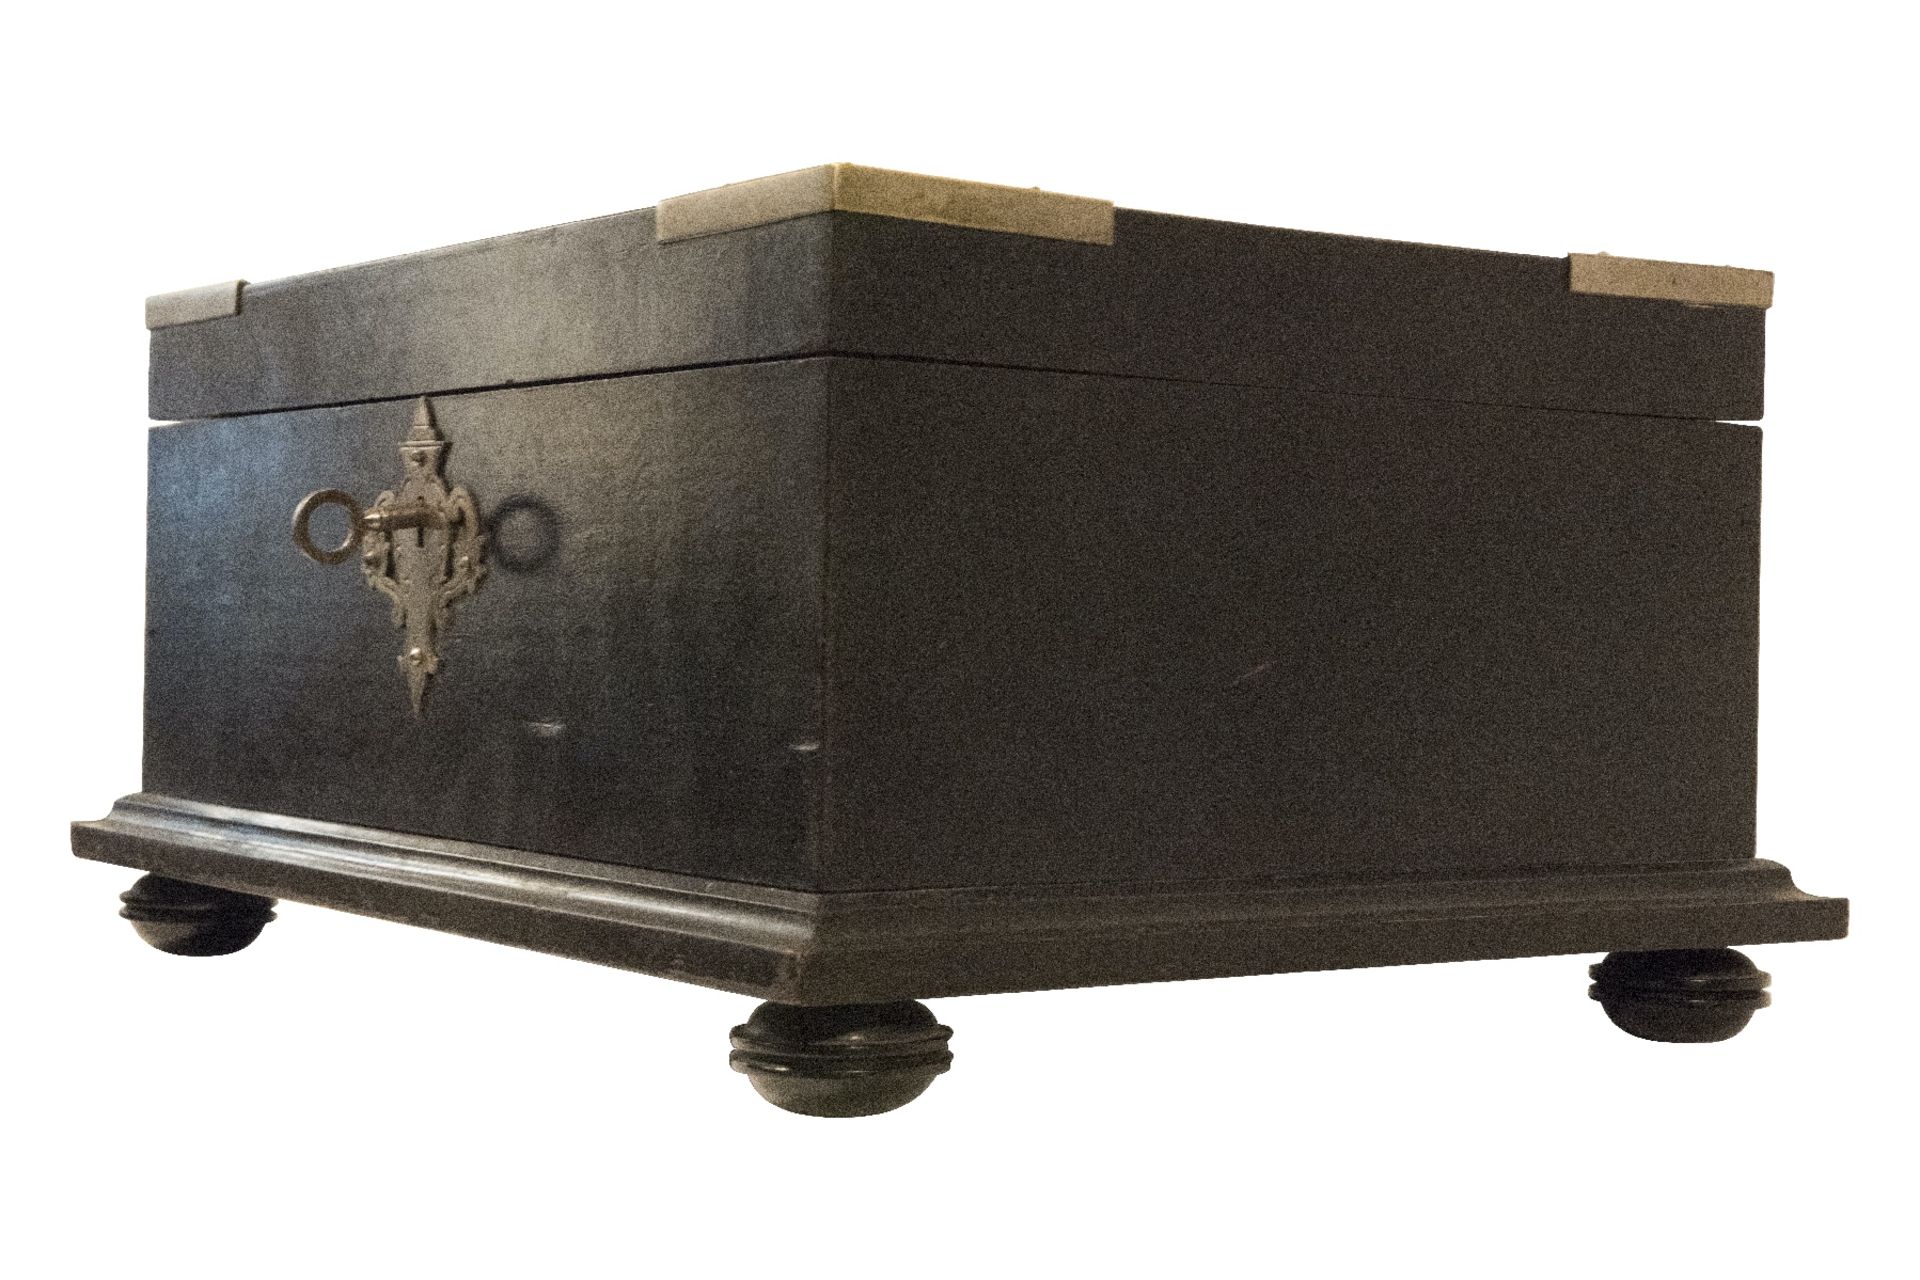 Holzschatulle mit Metallbeschlaegen | Wooden casket with metal fittings - Image 9 of 9